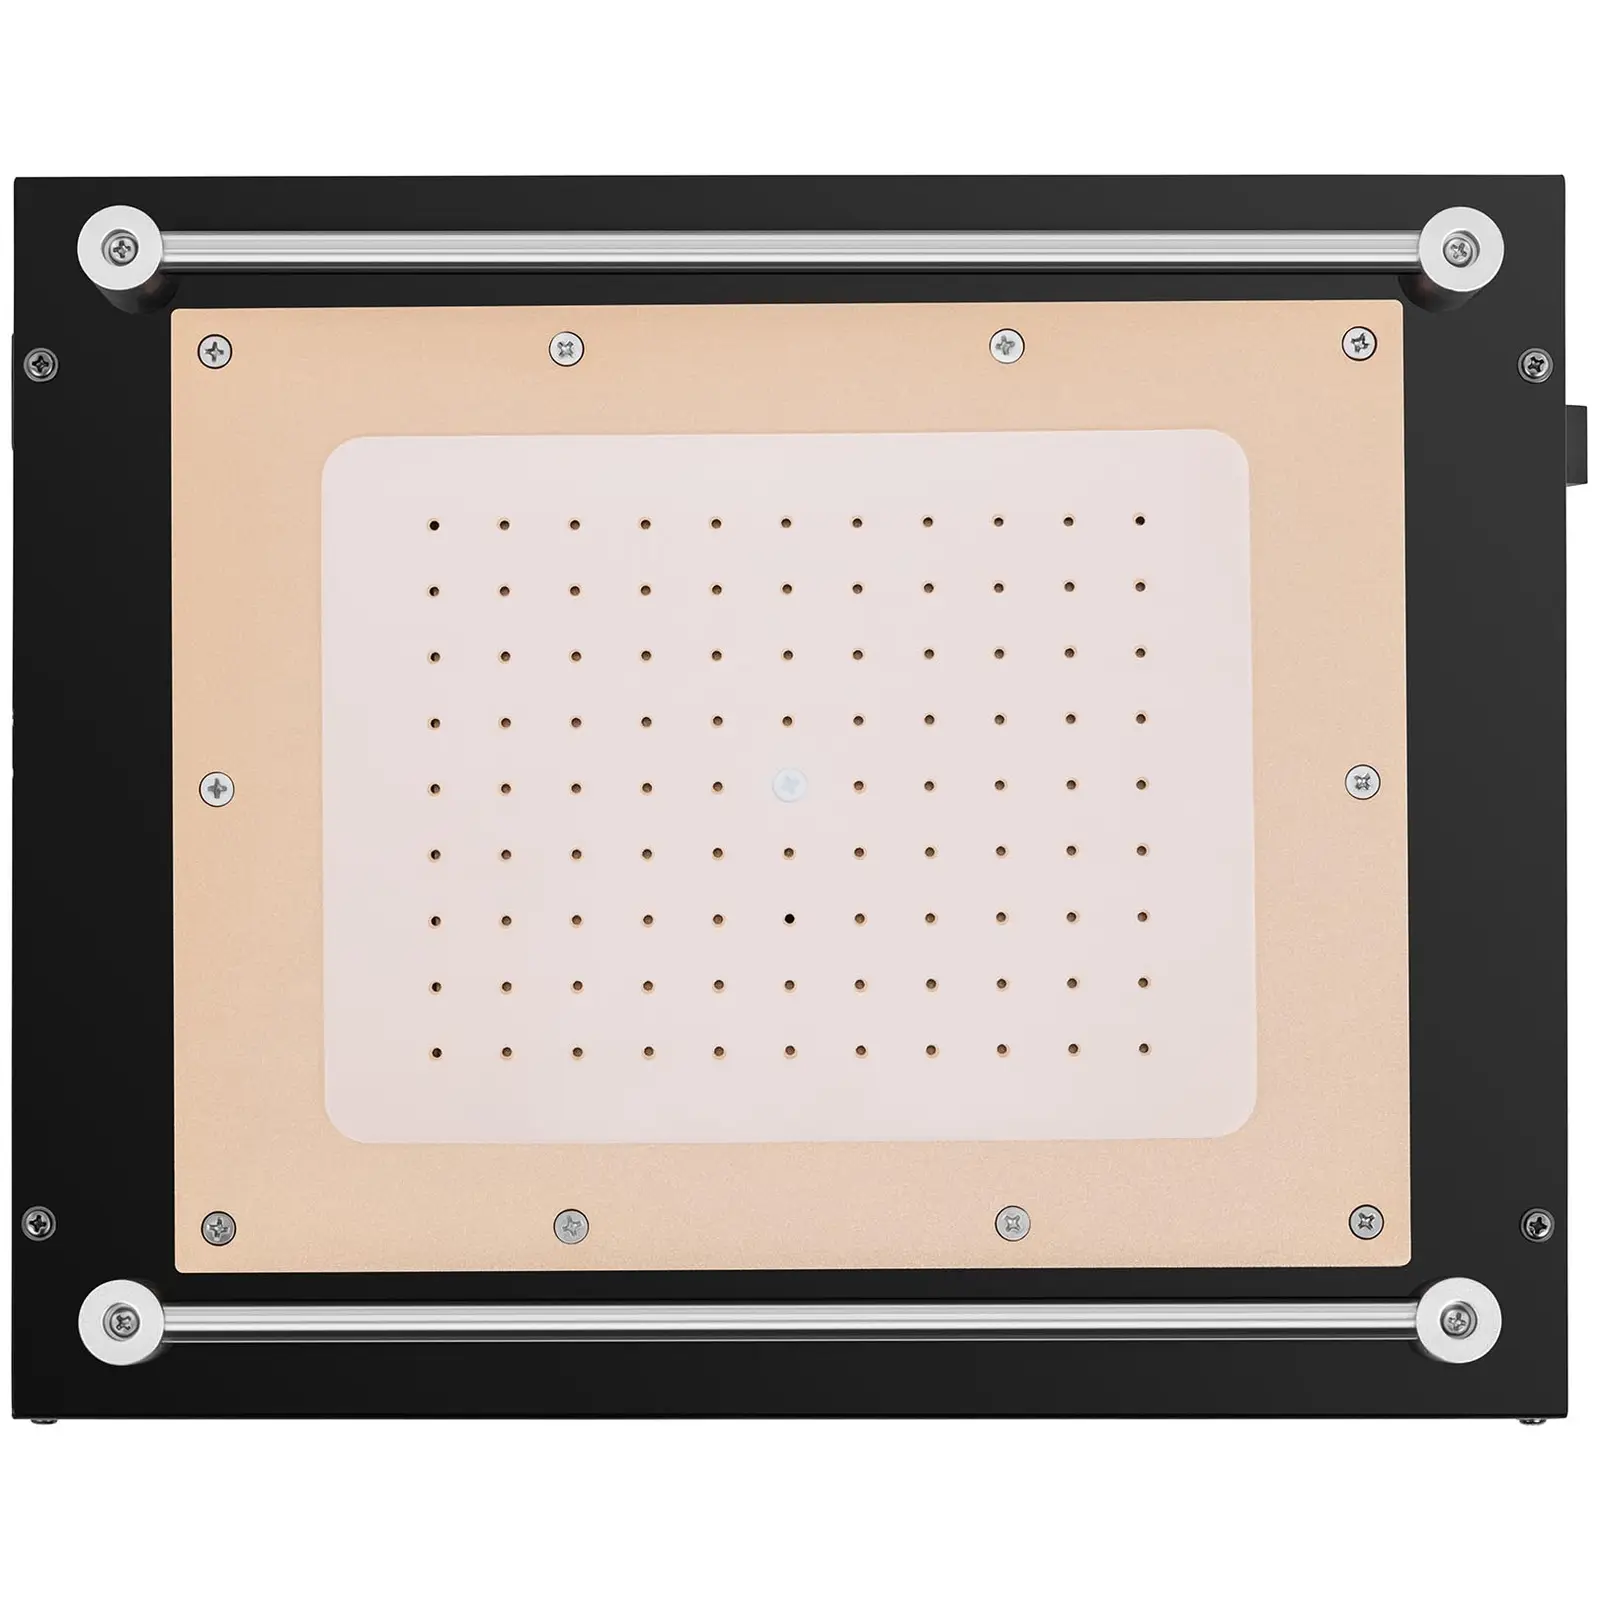 Separador de pantallas LCD - 12 pulgadas